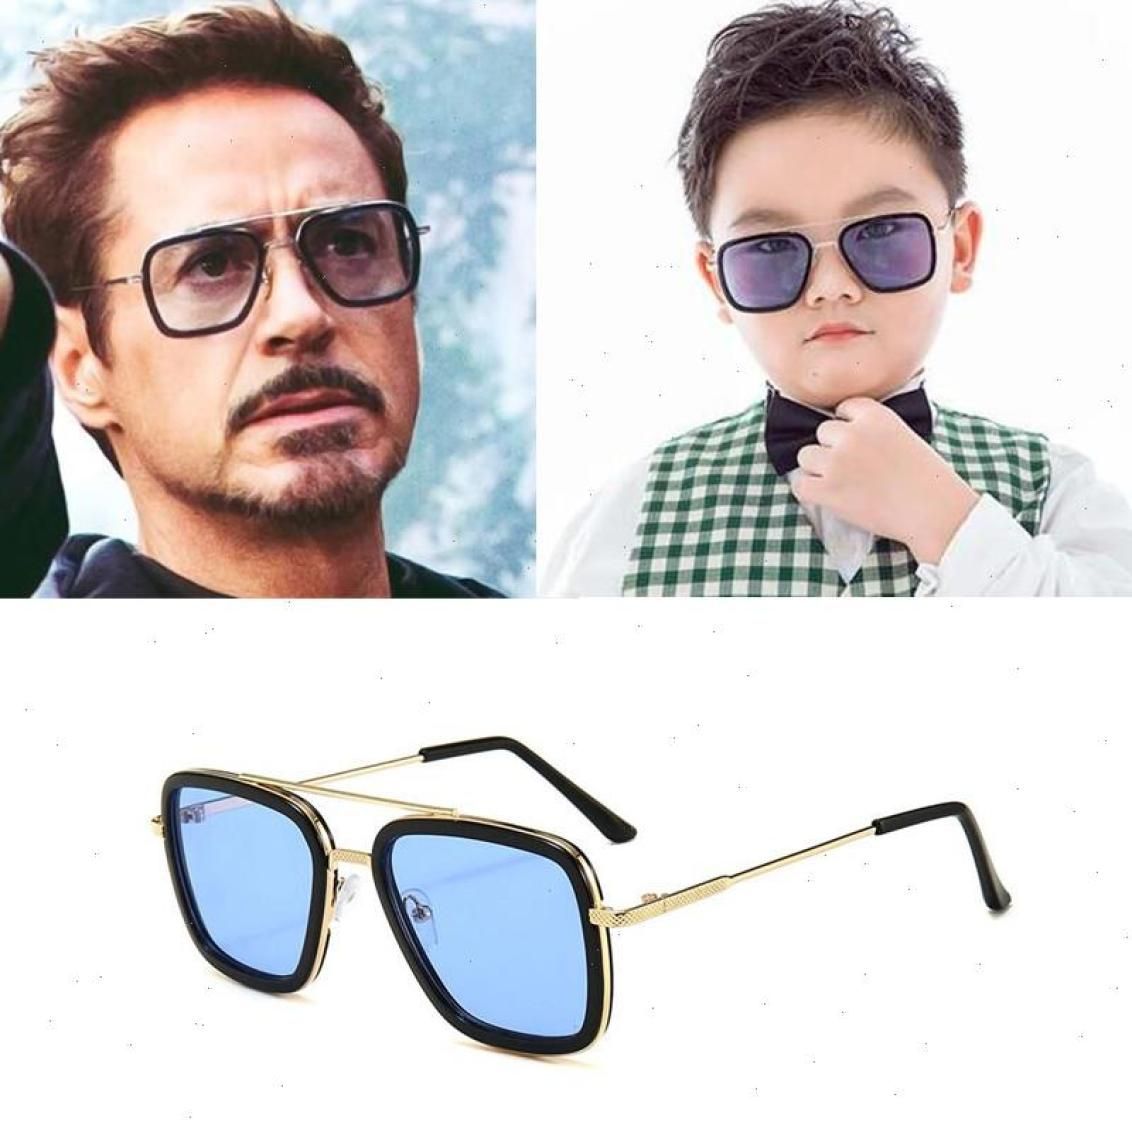 Lentes Stark Kids Sunglasses Alloy Glasses Children 816 Years Old Boys And Girls Kinder Zonnebrillen9652551 From Xrxl, $8.89 |